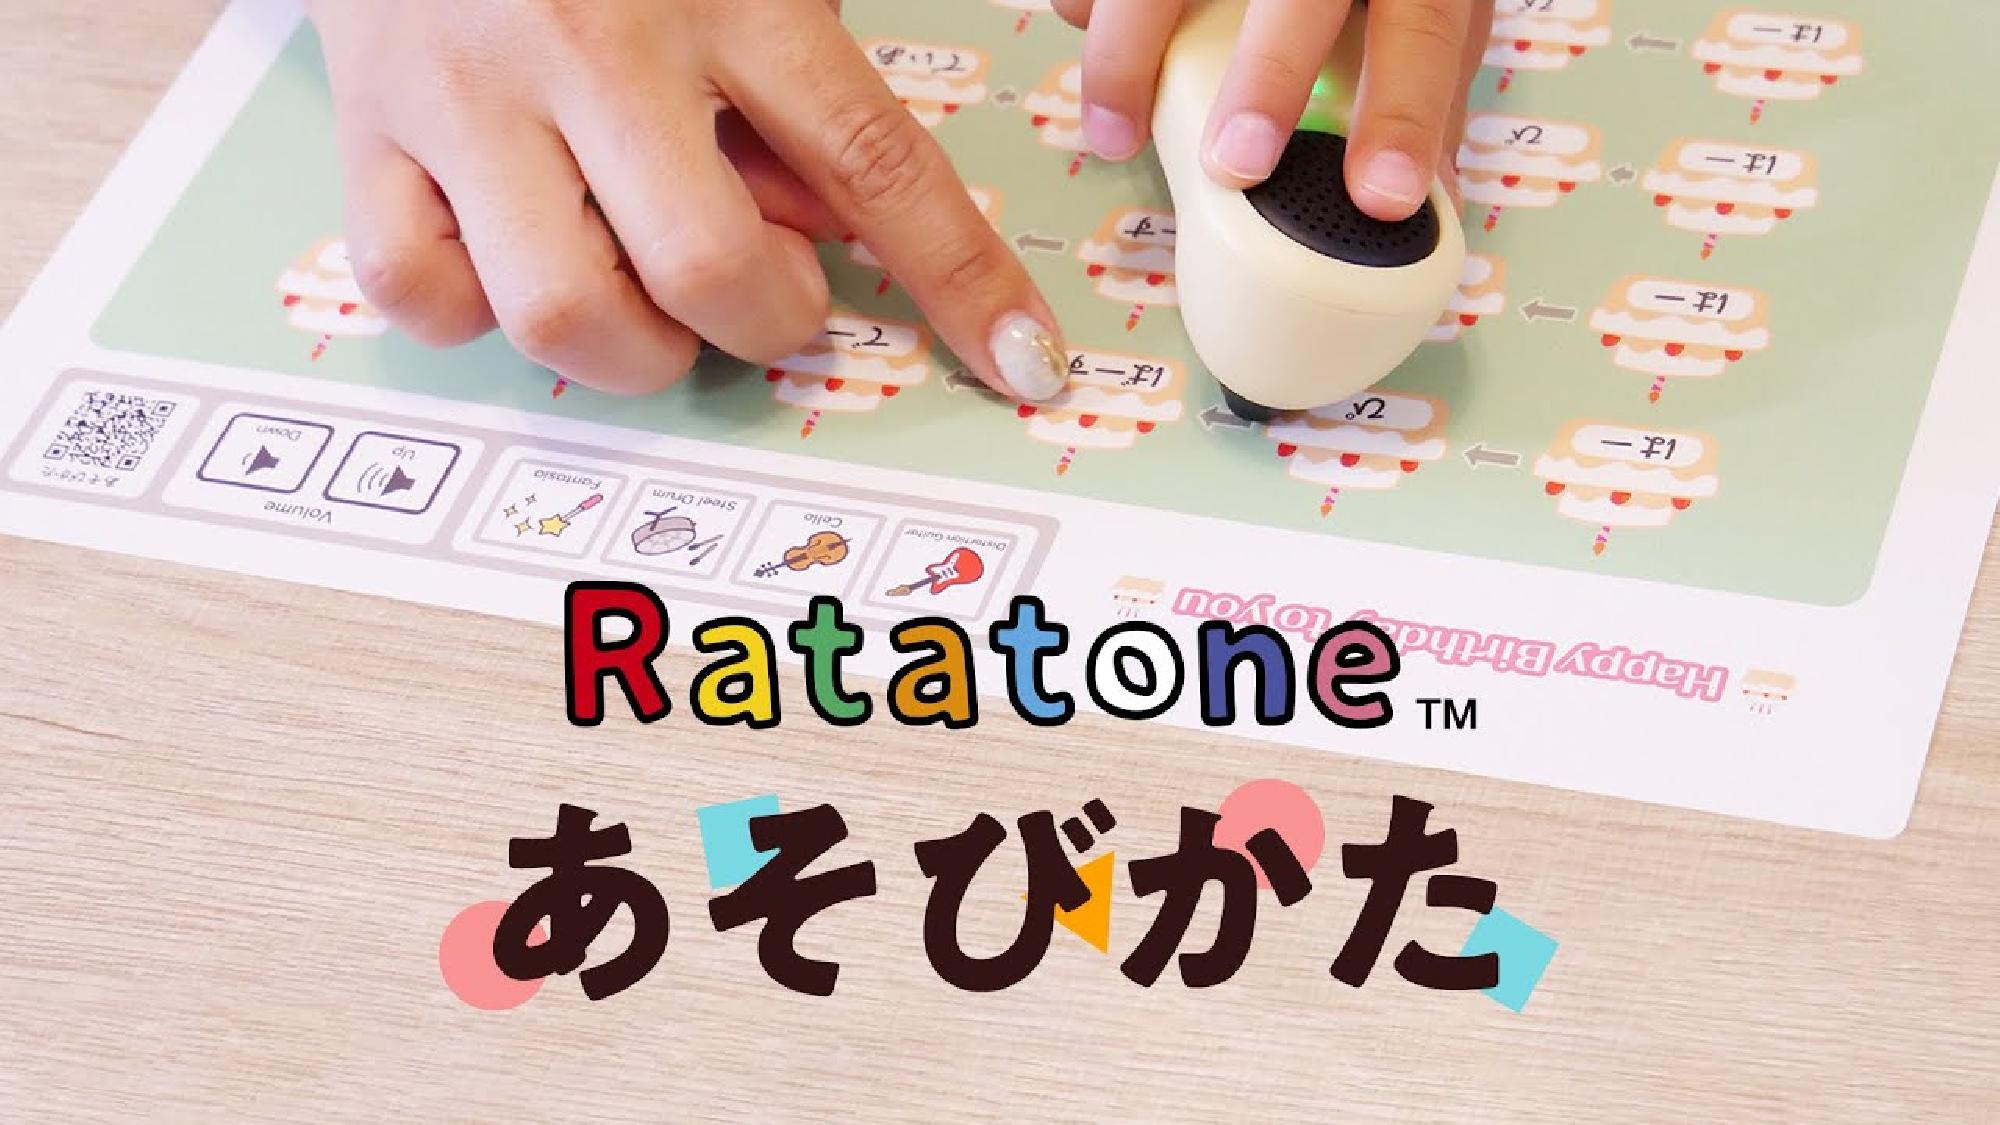  Ratatone紹介動画「あそびかた」